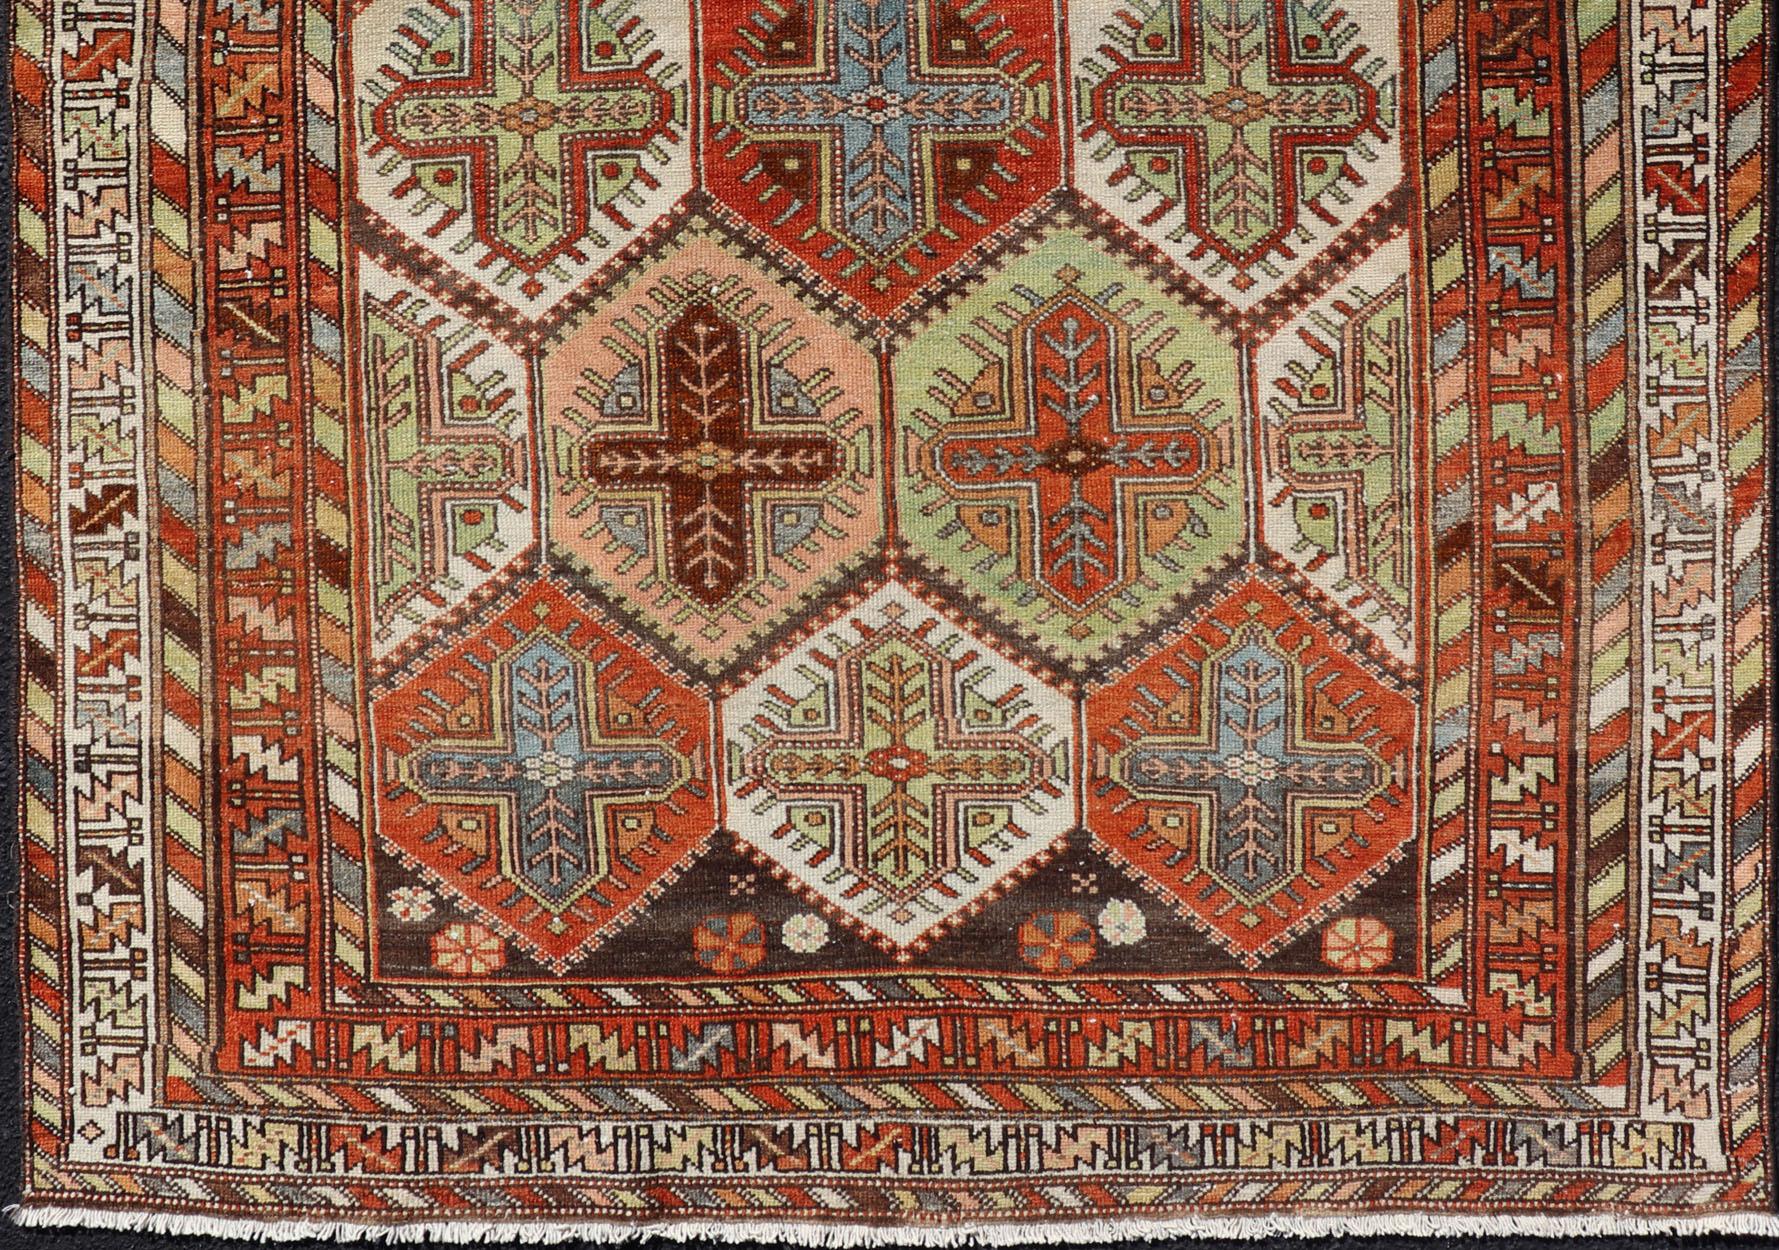 Antique Persian Tribal Garden design with crosses Bakhtiari rug in multi colors. 
Keivan Woven Arts / rug EMB-9550-P13055, country of origin / type: Iran / Bakhtiari, circa 1920.
This magnificent Antique Bakhtiari Rug features an all-over diamond